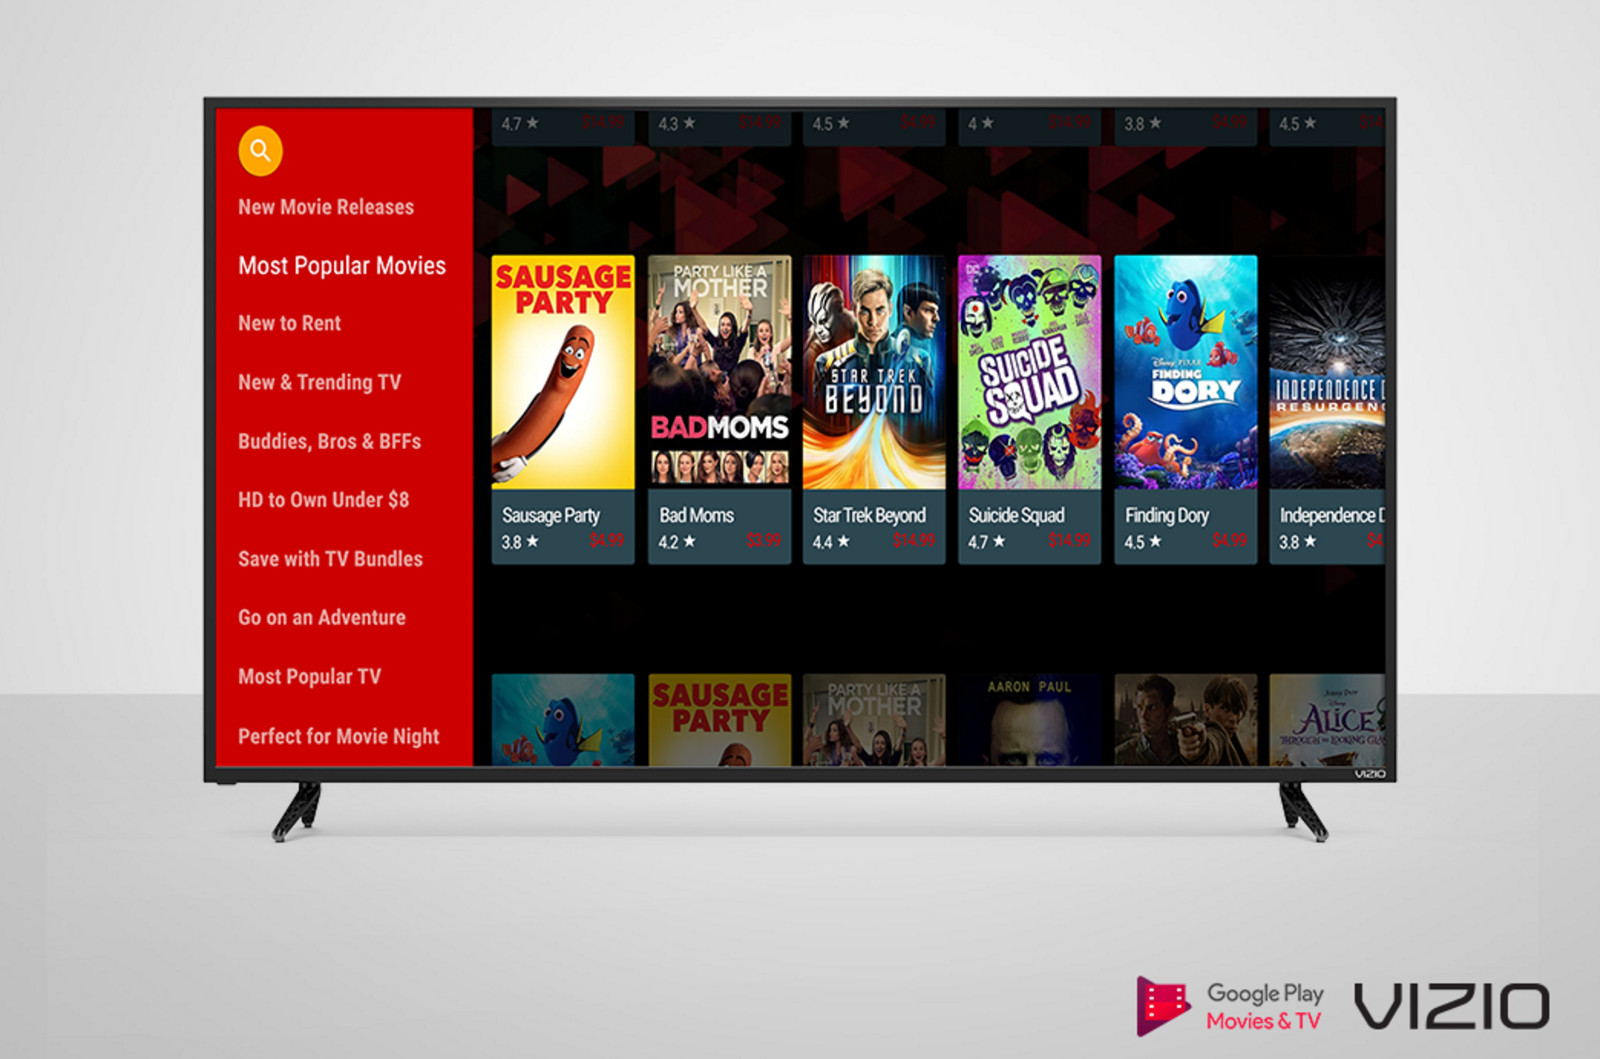 Google play movies. Google Play movies & TV. Google Play Smart TV. Most popular movies.